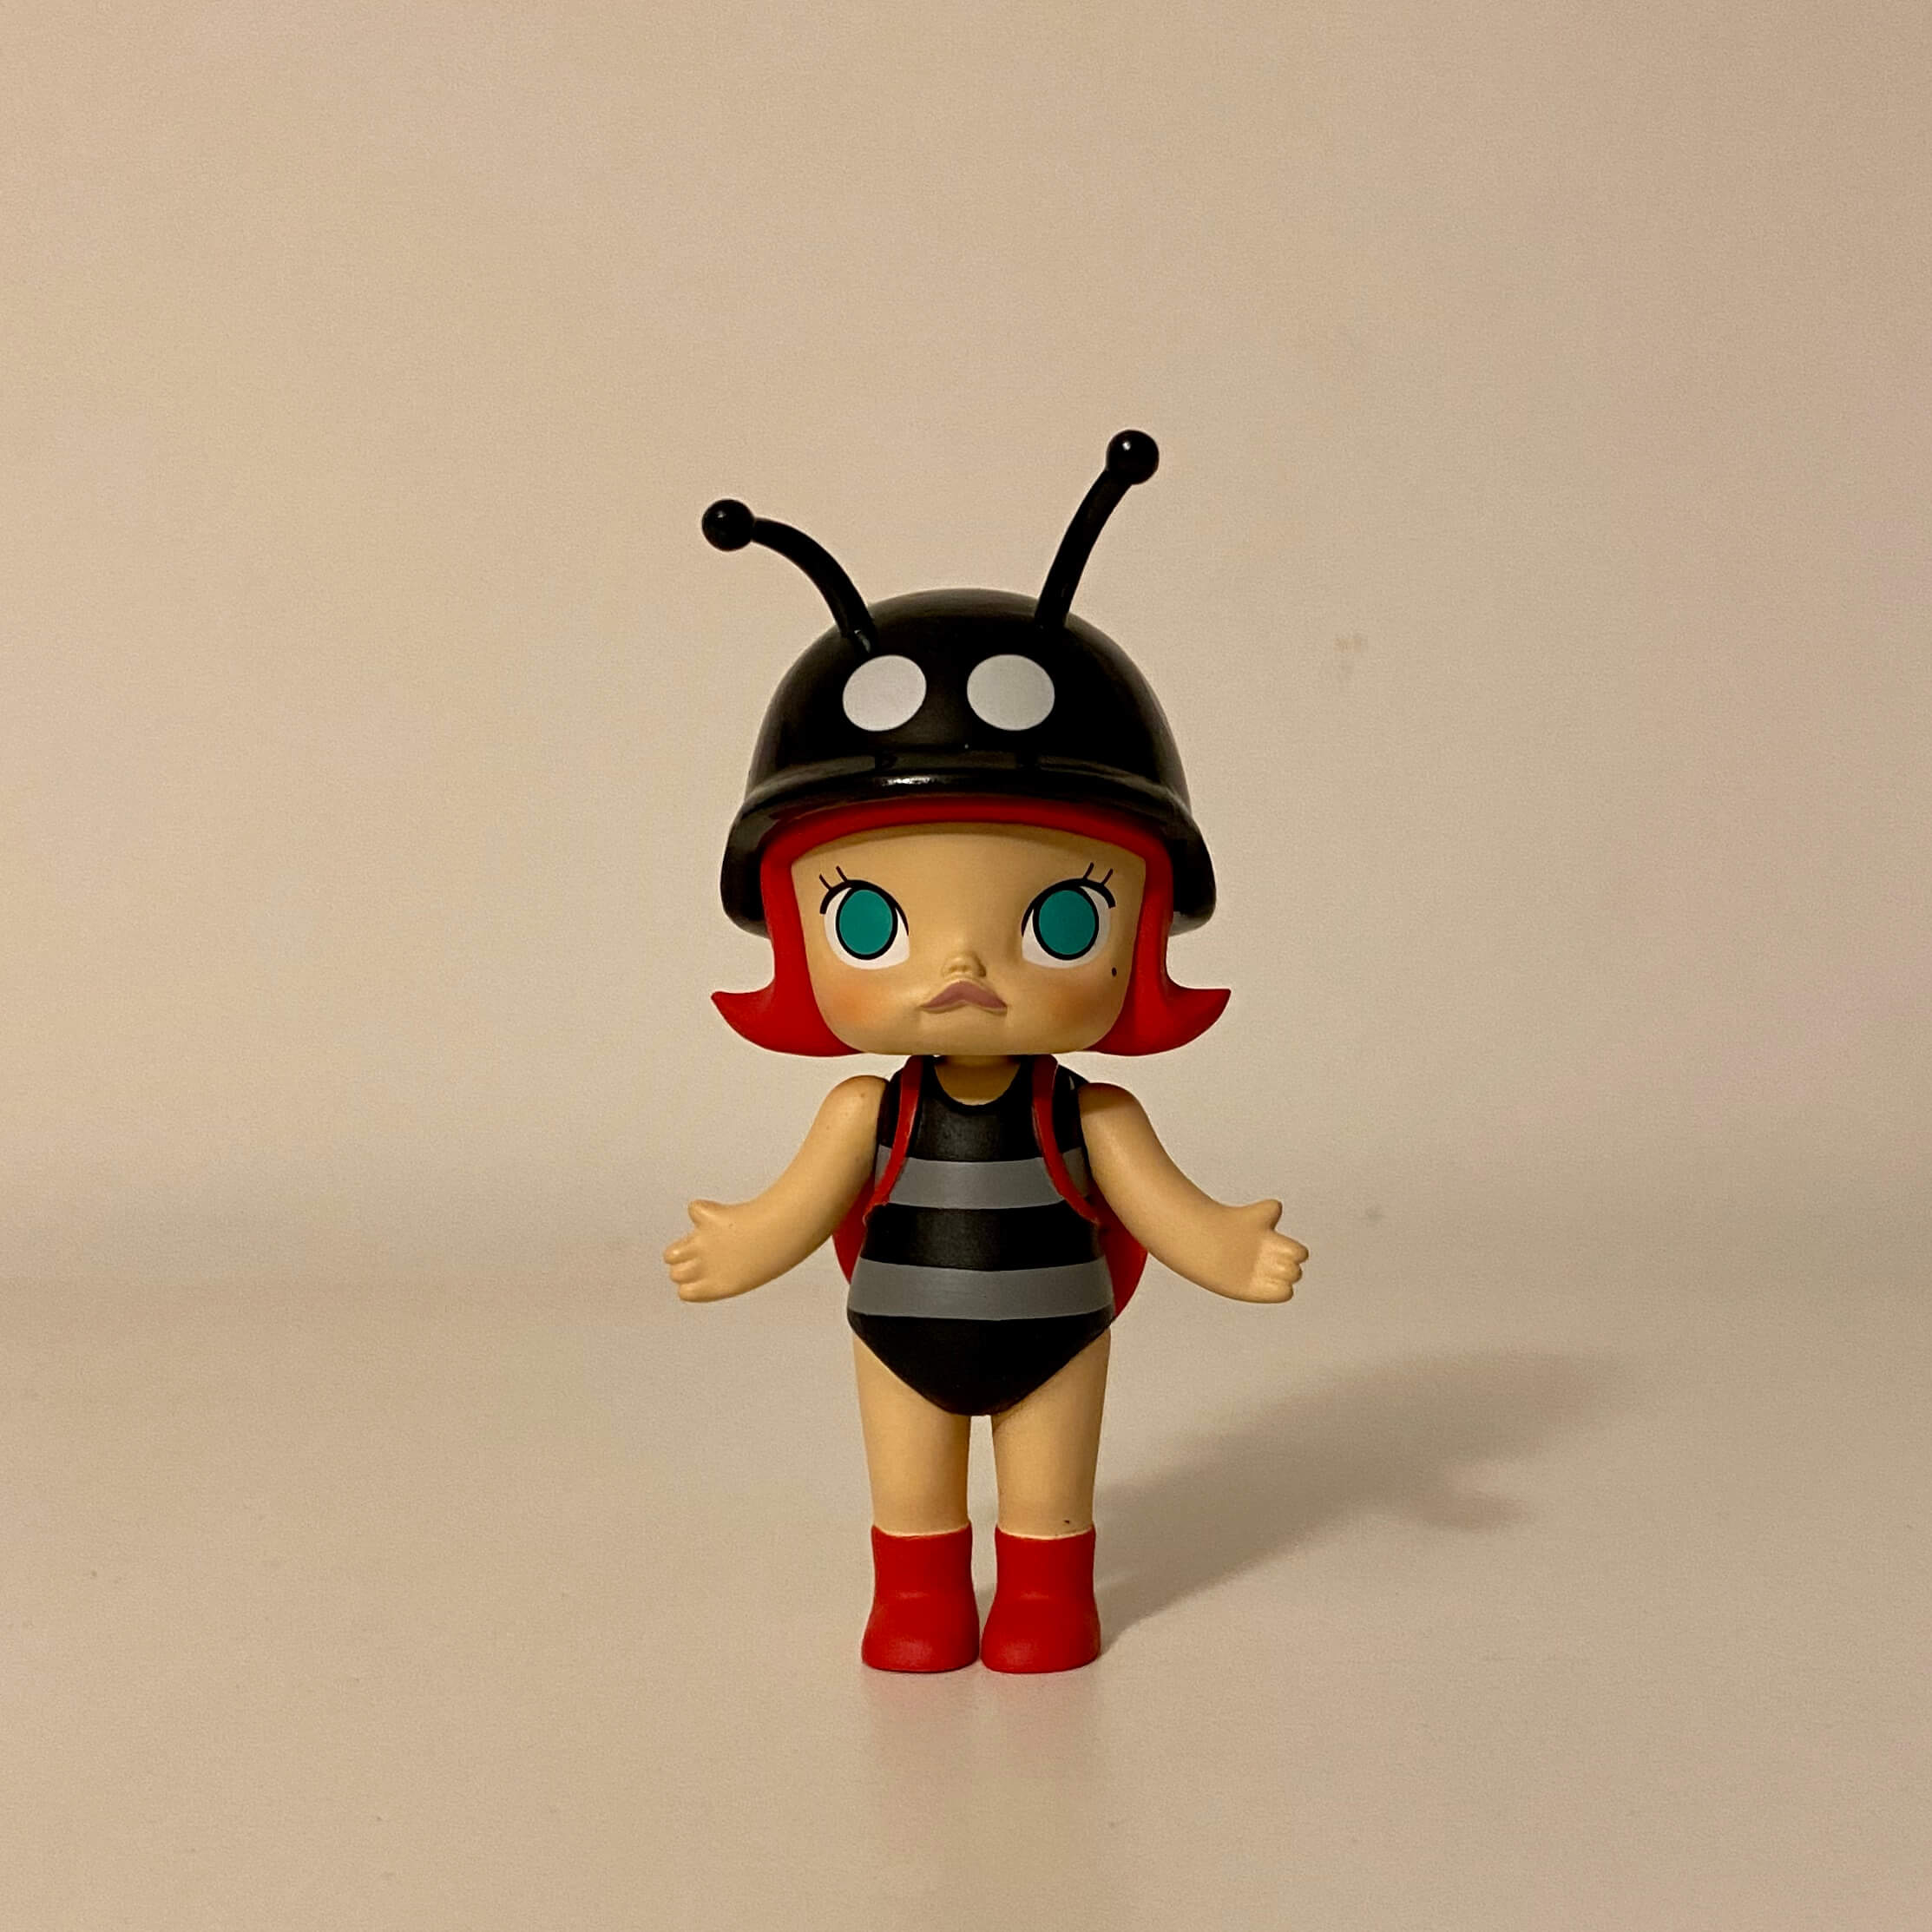 POP MART KENNYSWORK Molly Royal Animal Mini Figure Designer Toy Mix Color Dragon 